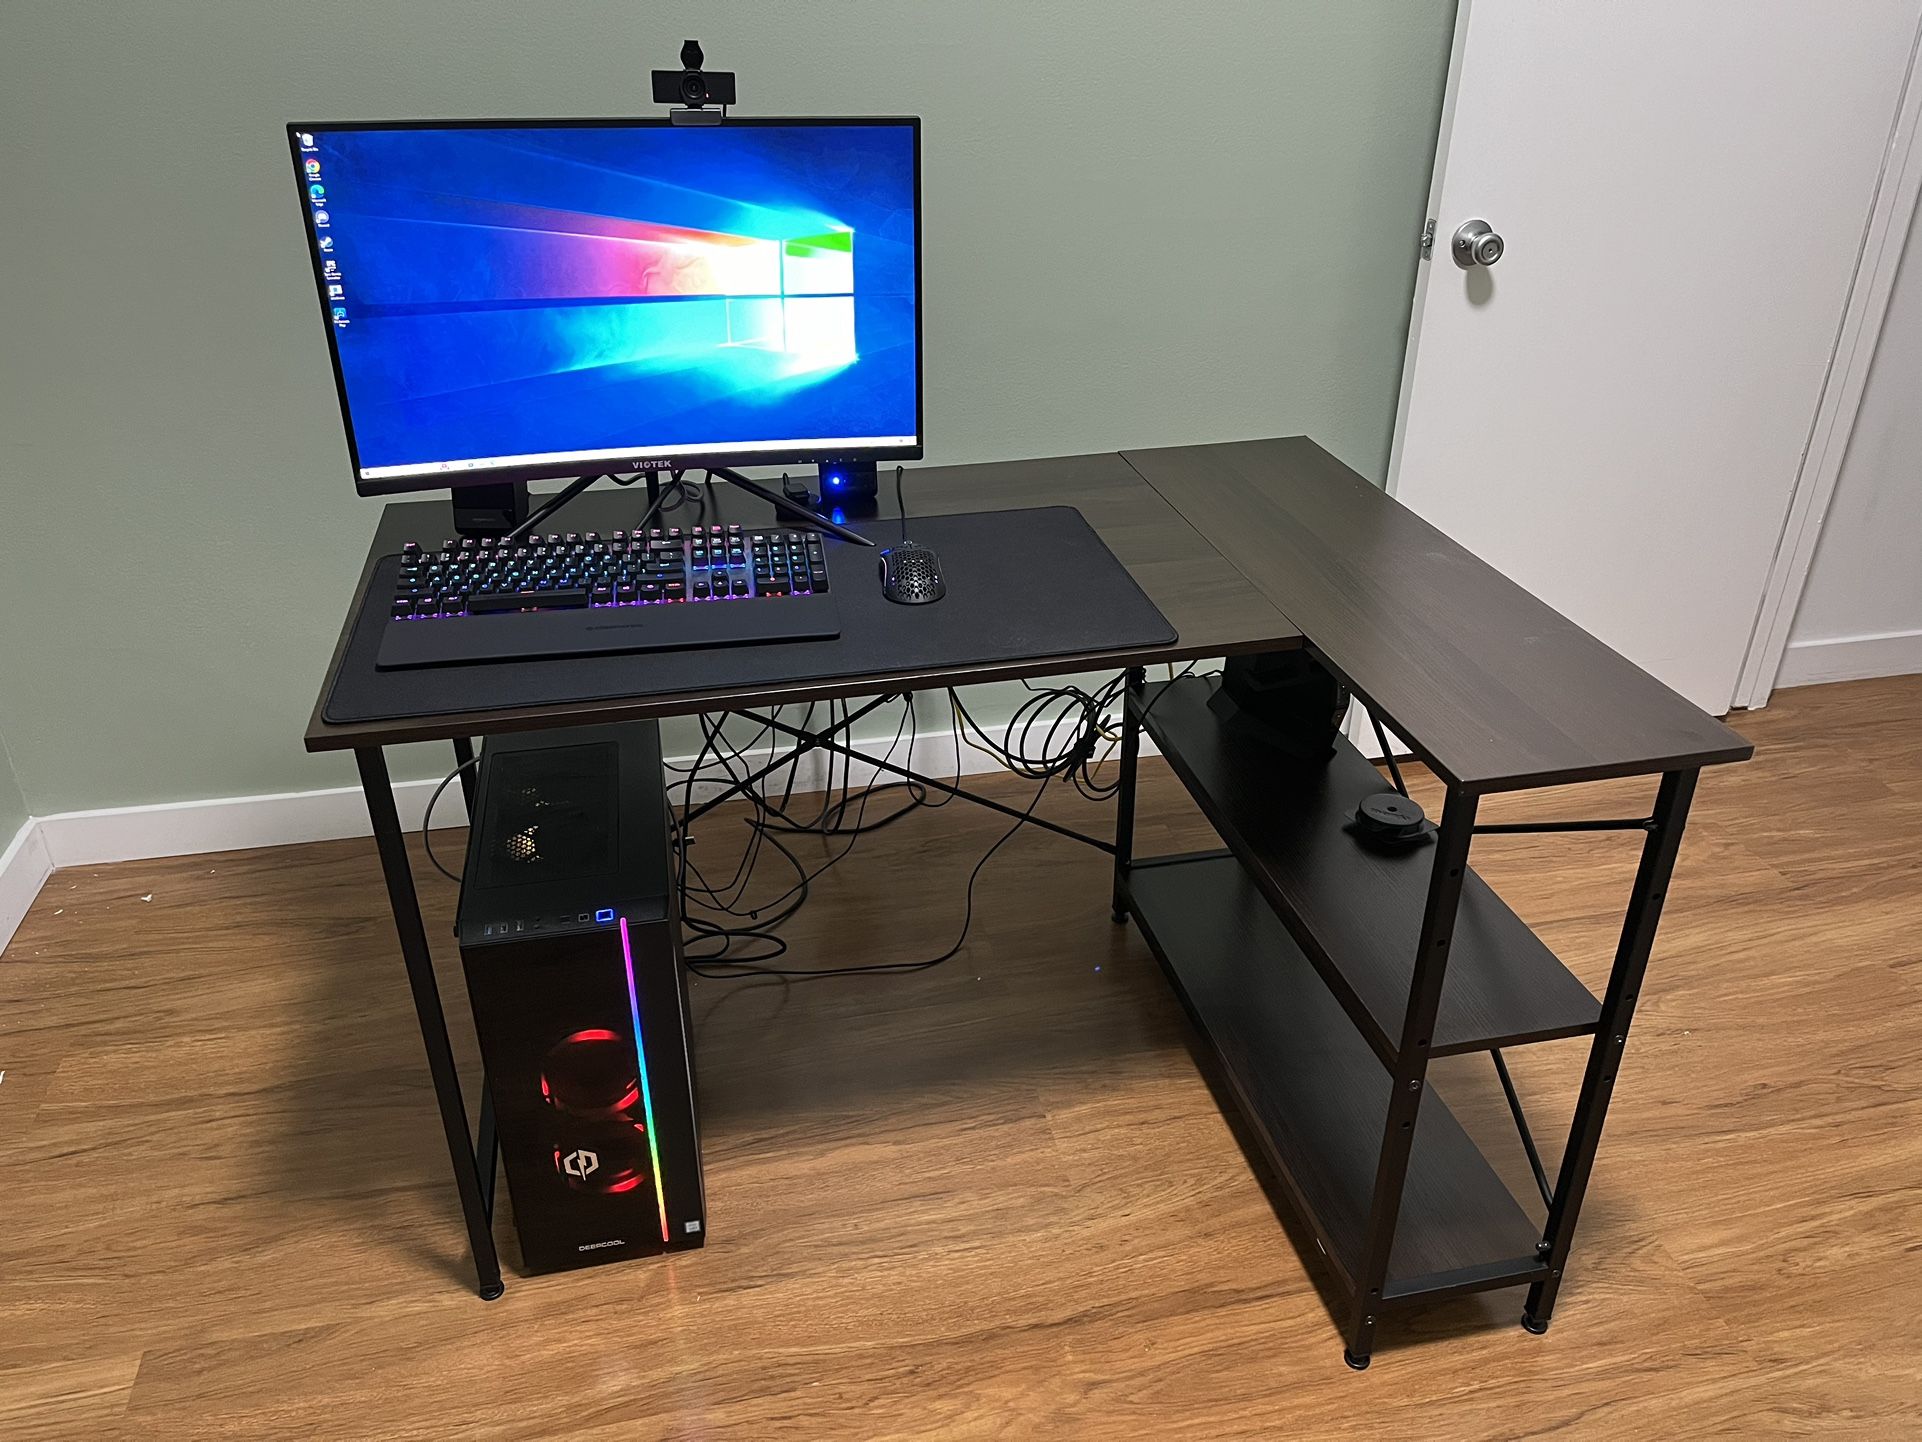 Full PC setup w/ Free Desk (Monitor, Computer, Mouse, Keyboard)